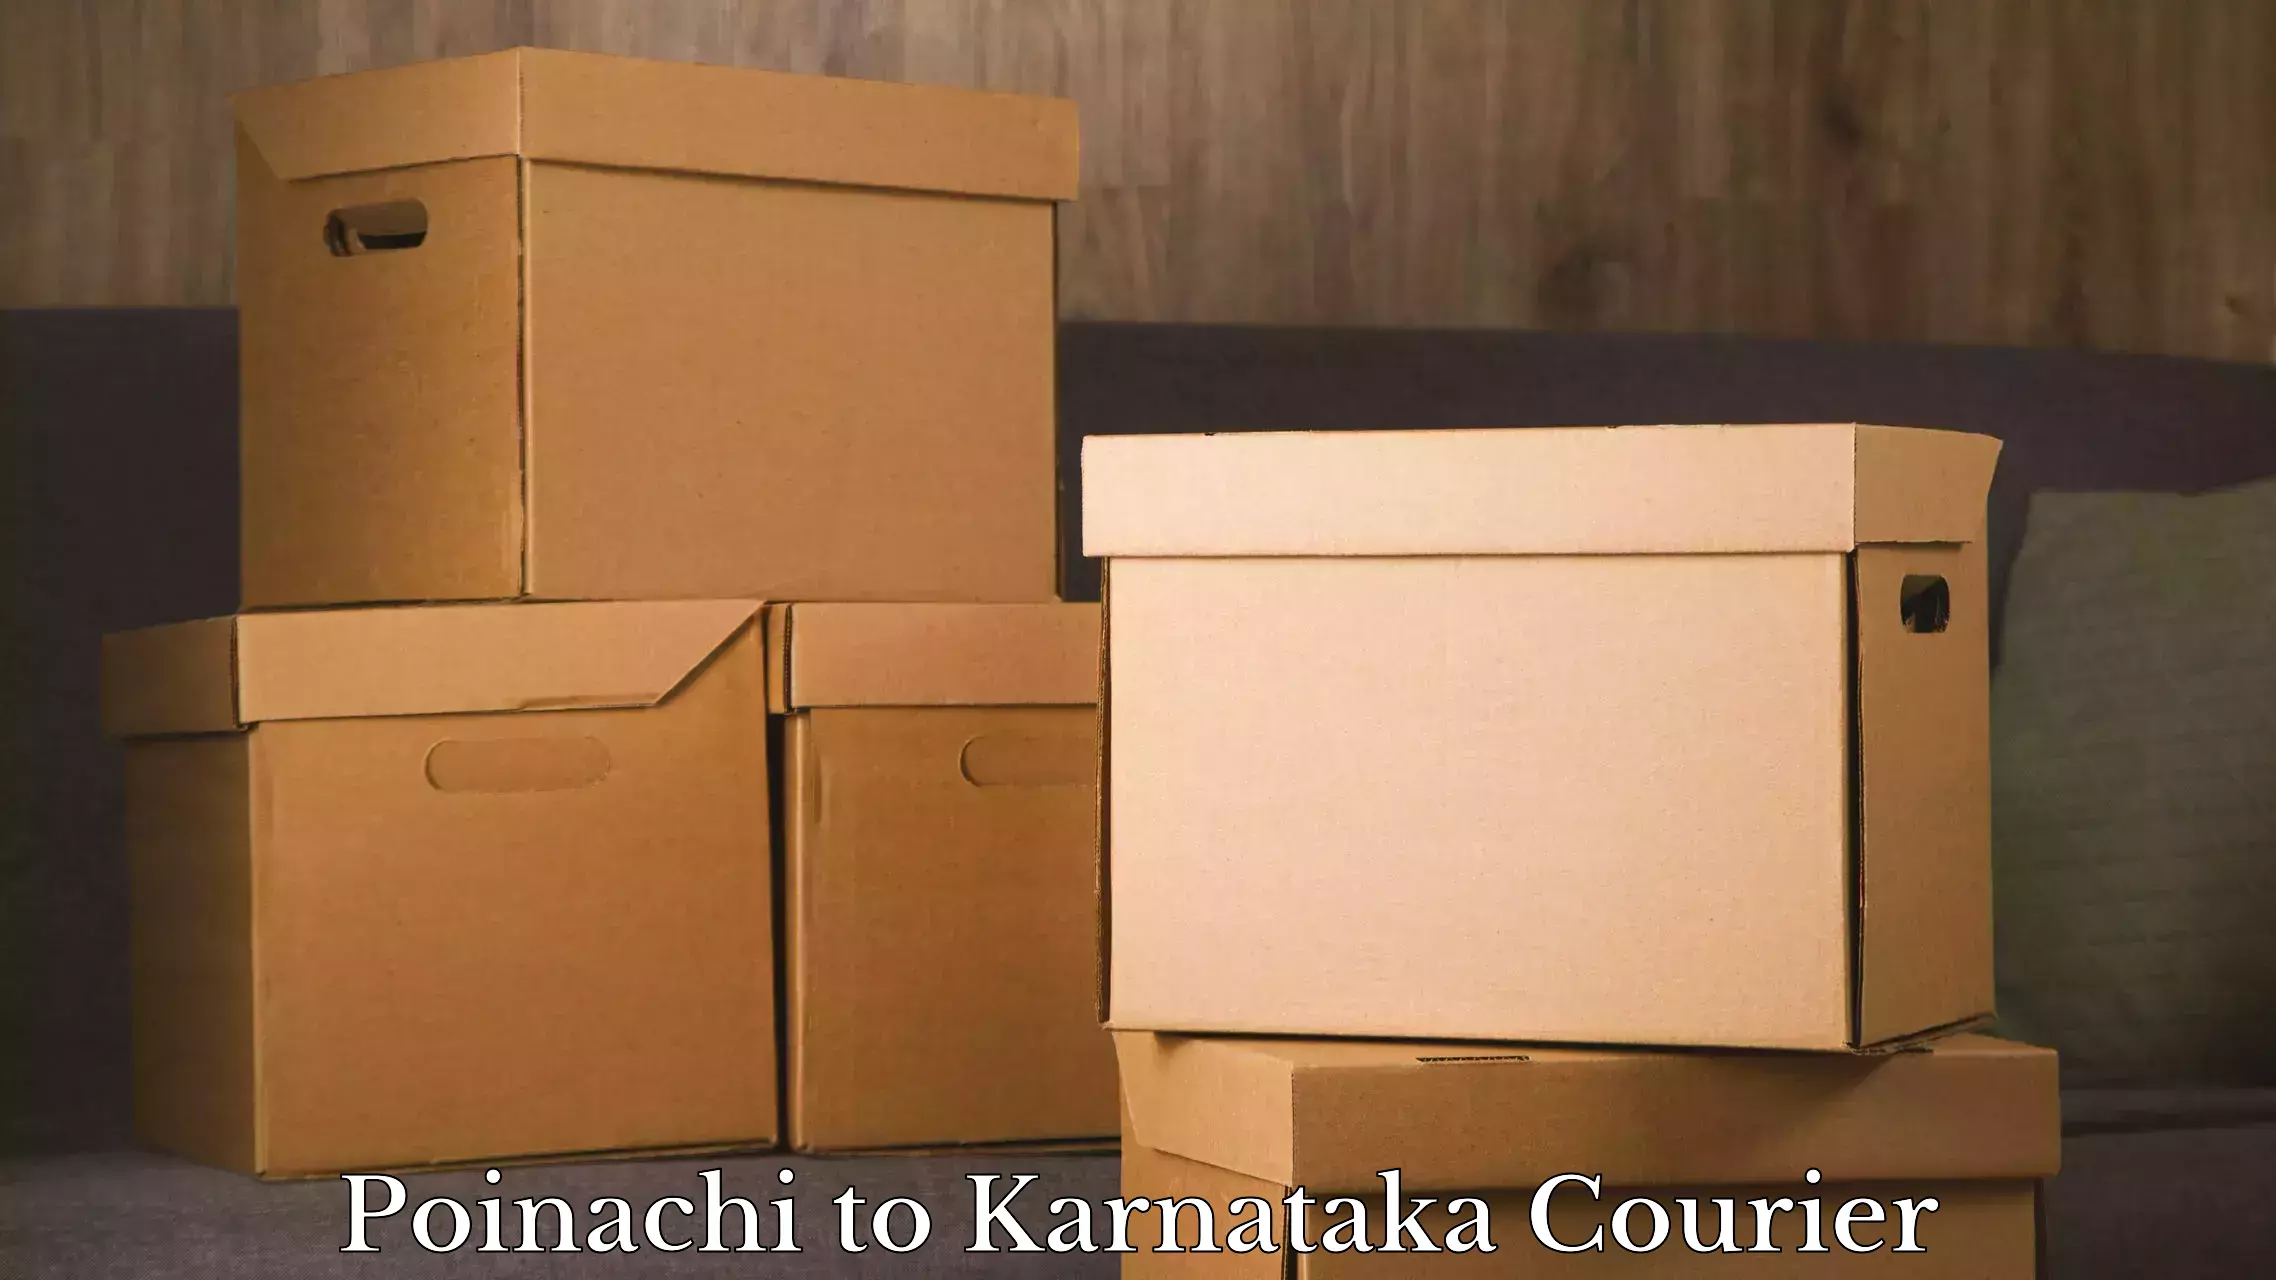 Doorstep luggage collection in Poinachi to Karnataka